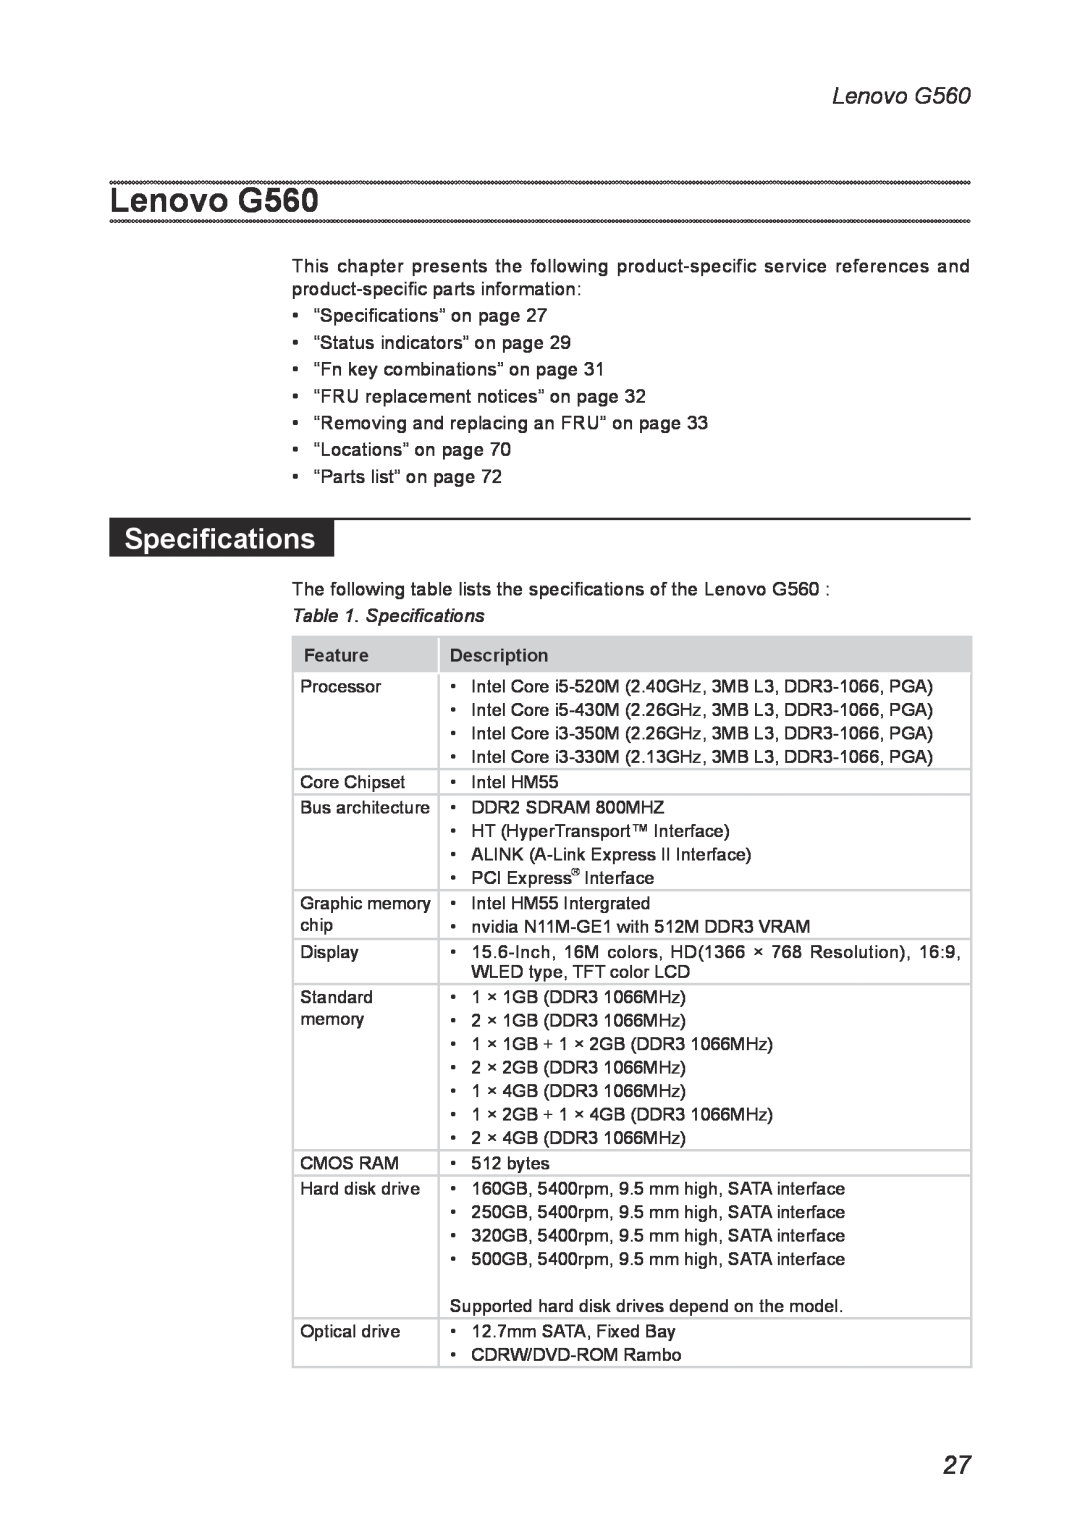 Lenovo manual Lenovo G560, Specifications 